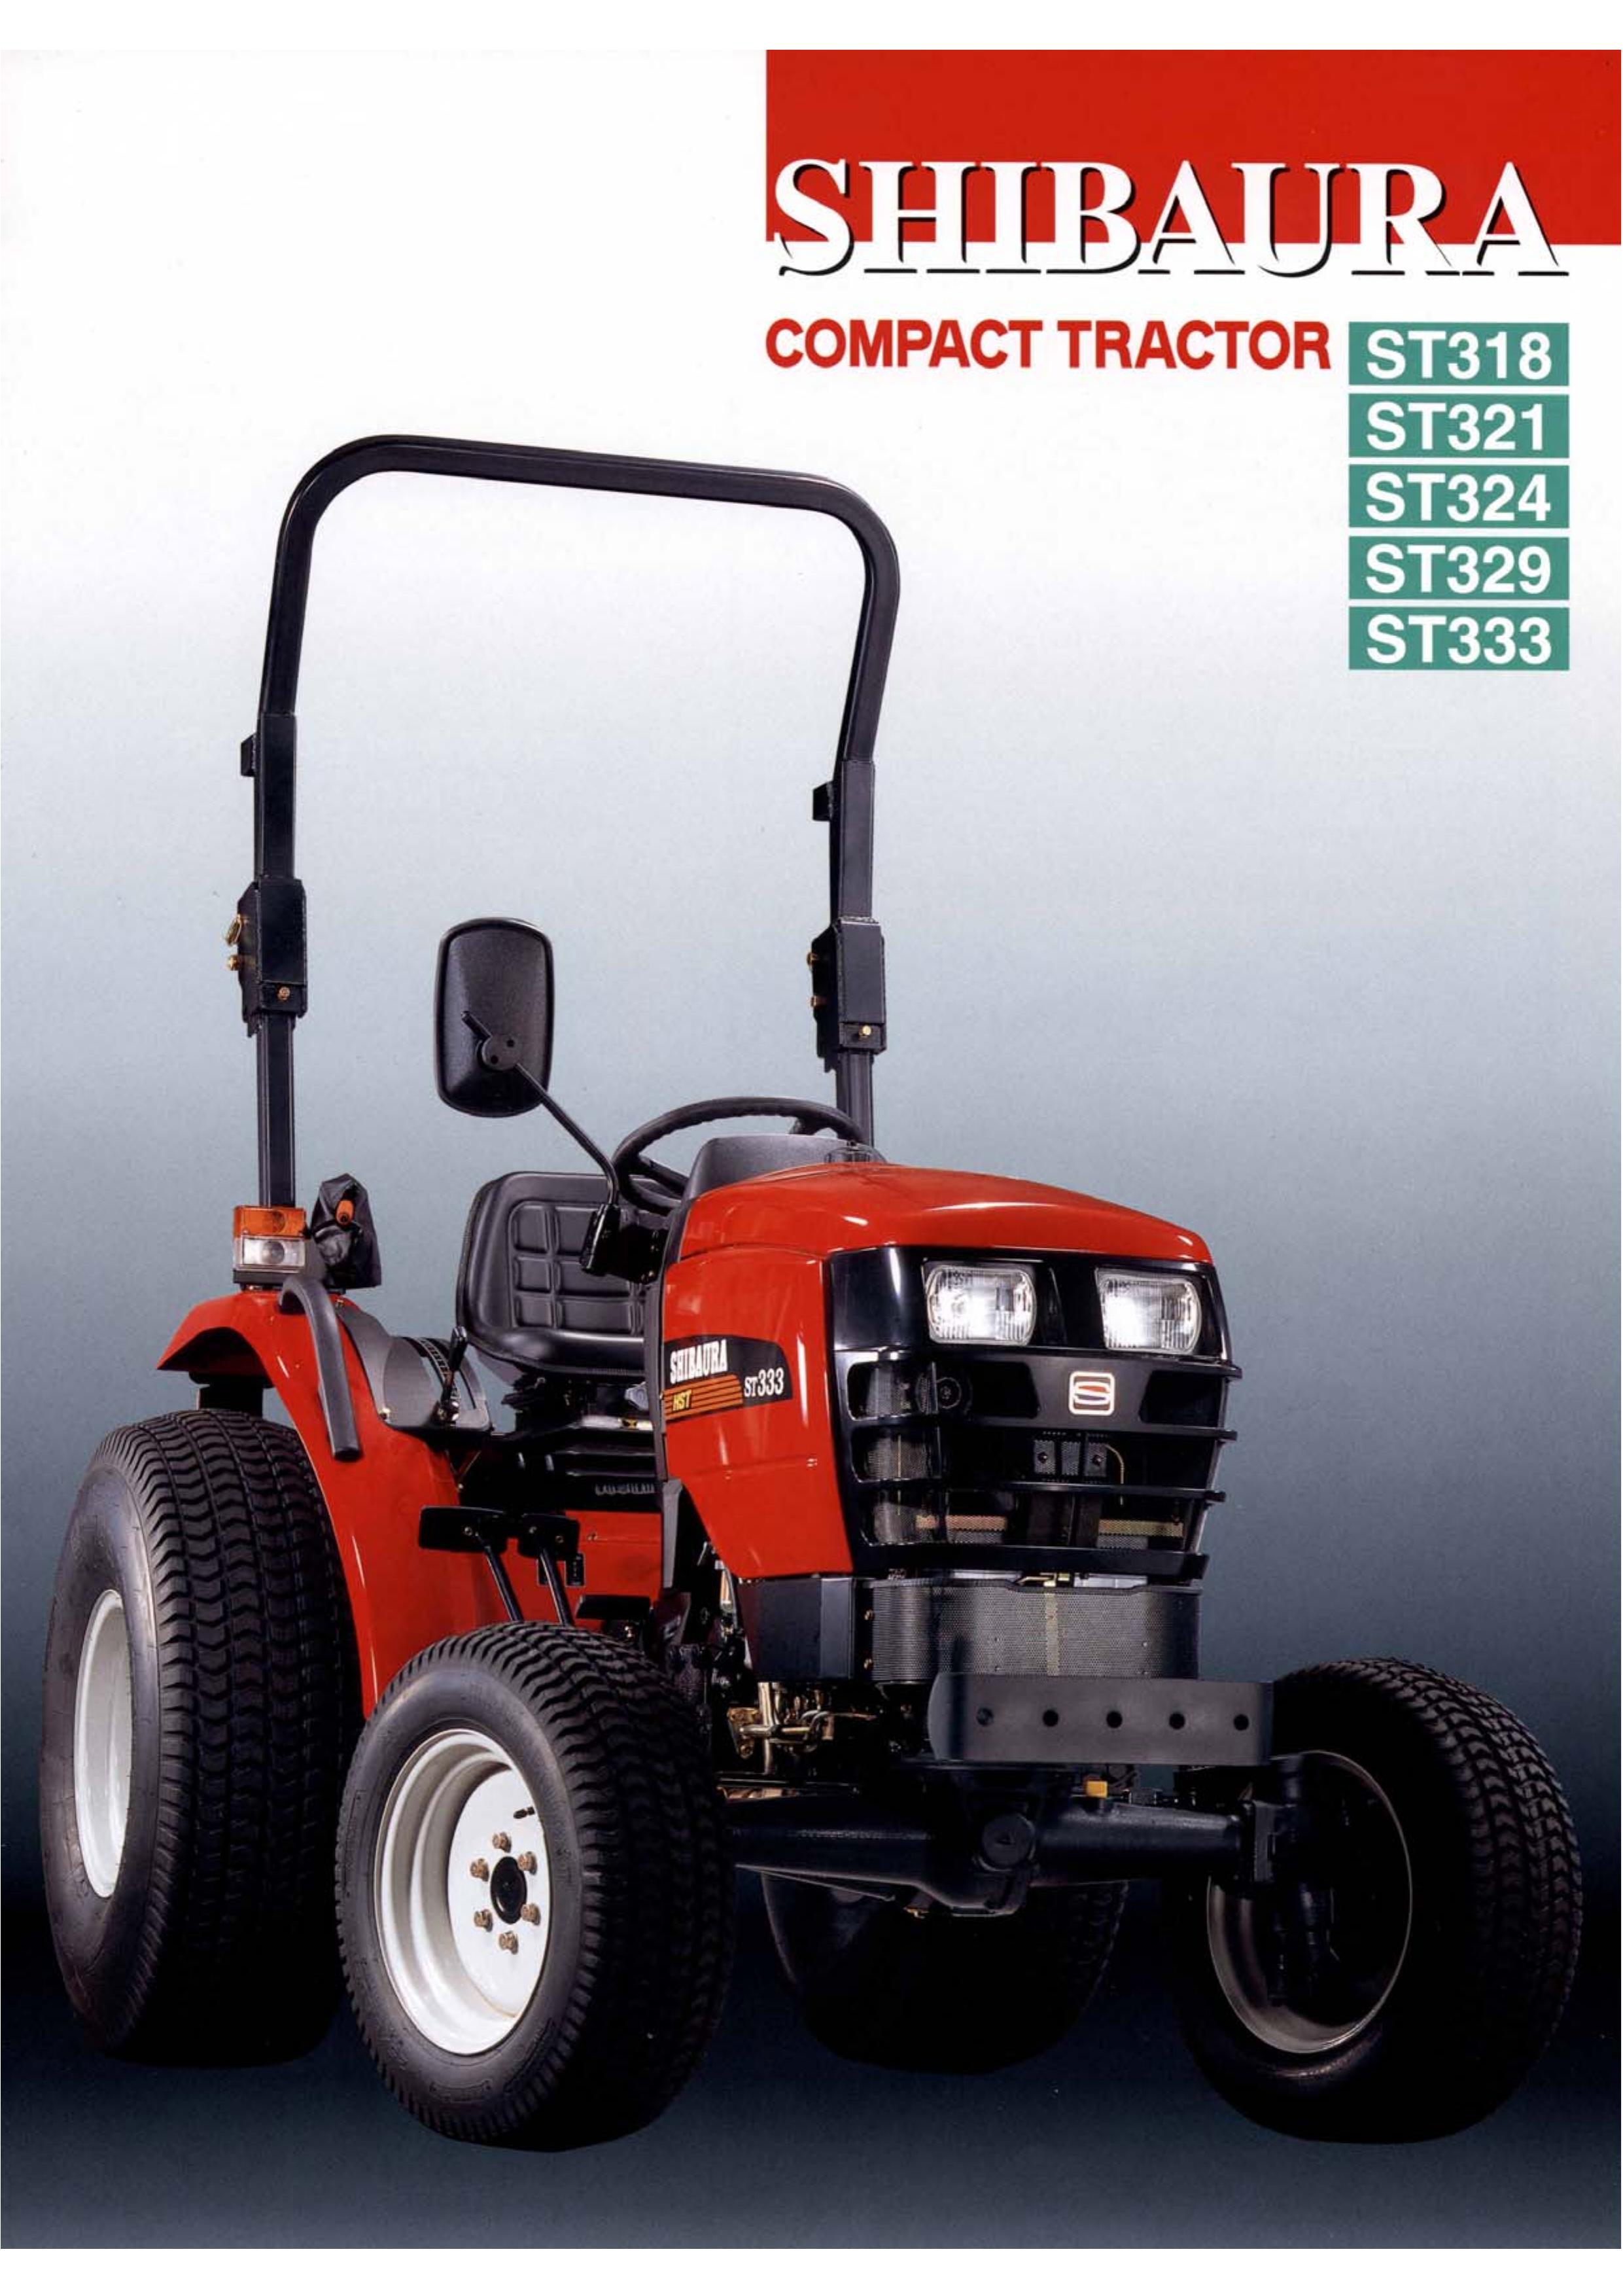 Shibaura ST321 Lawn Mower User Manual